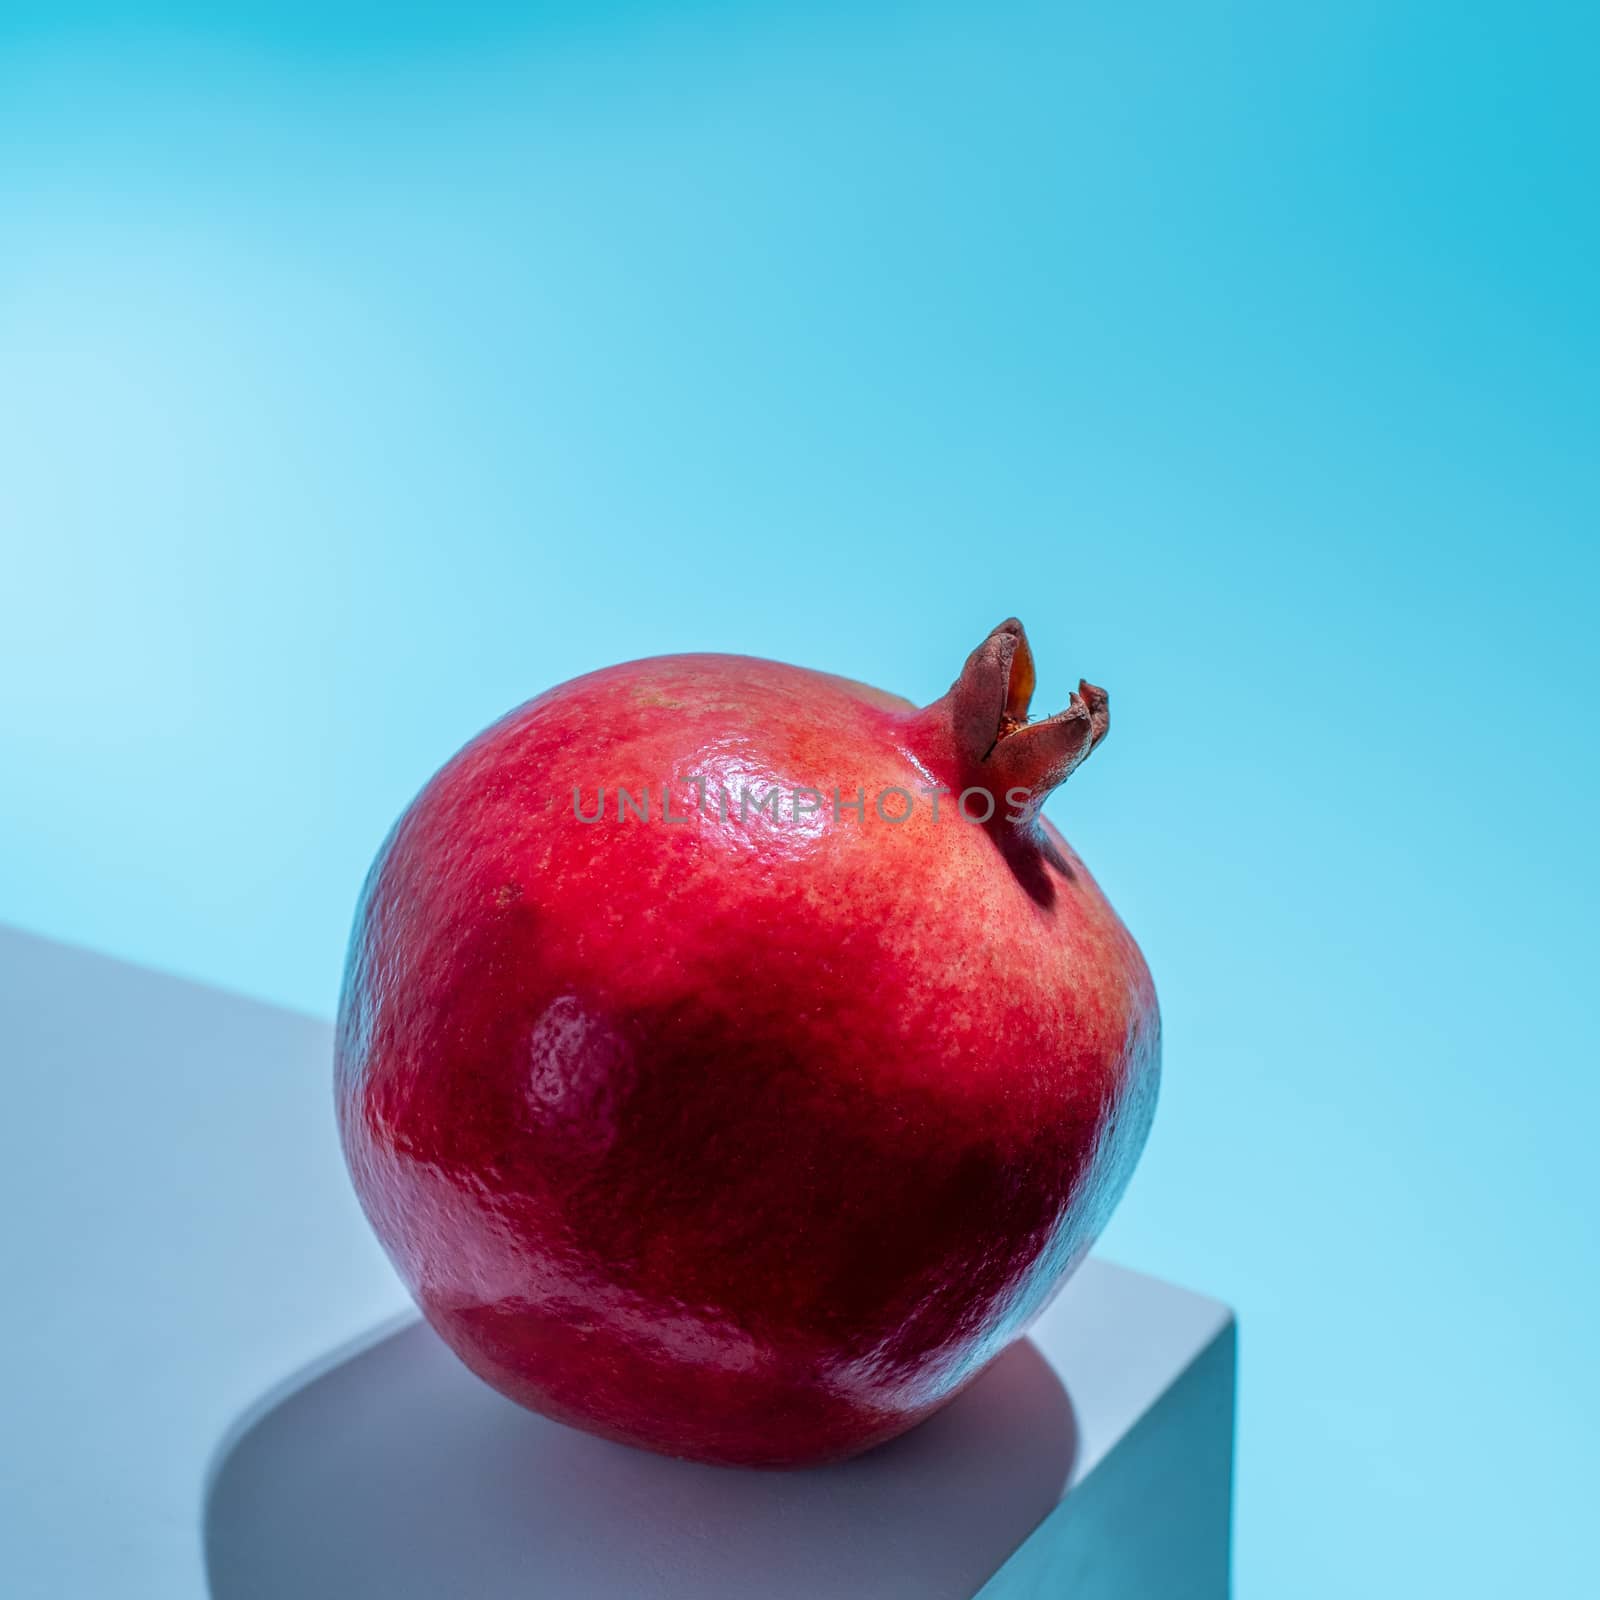 Pomegranate art on blue background by fascinadora